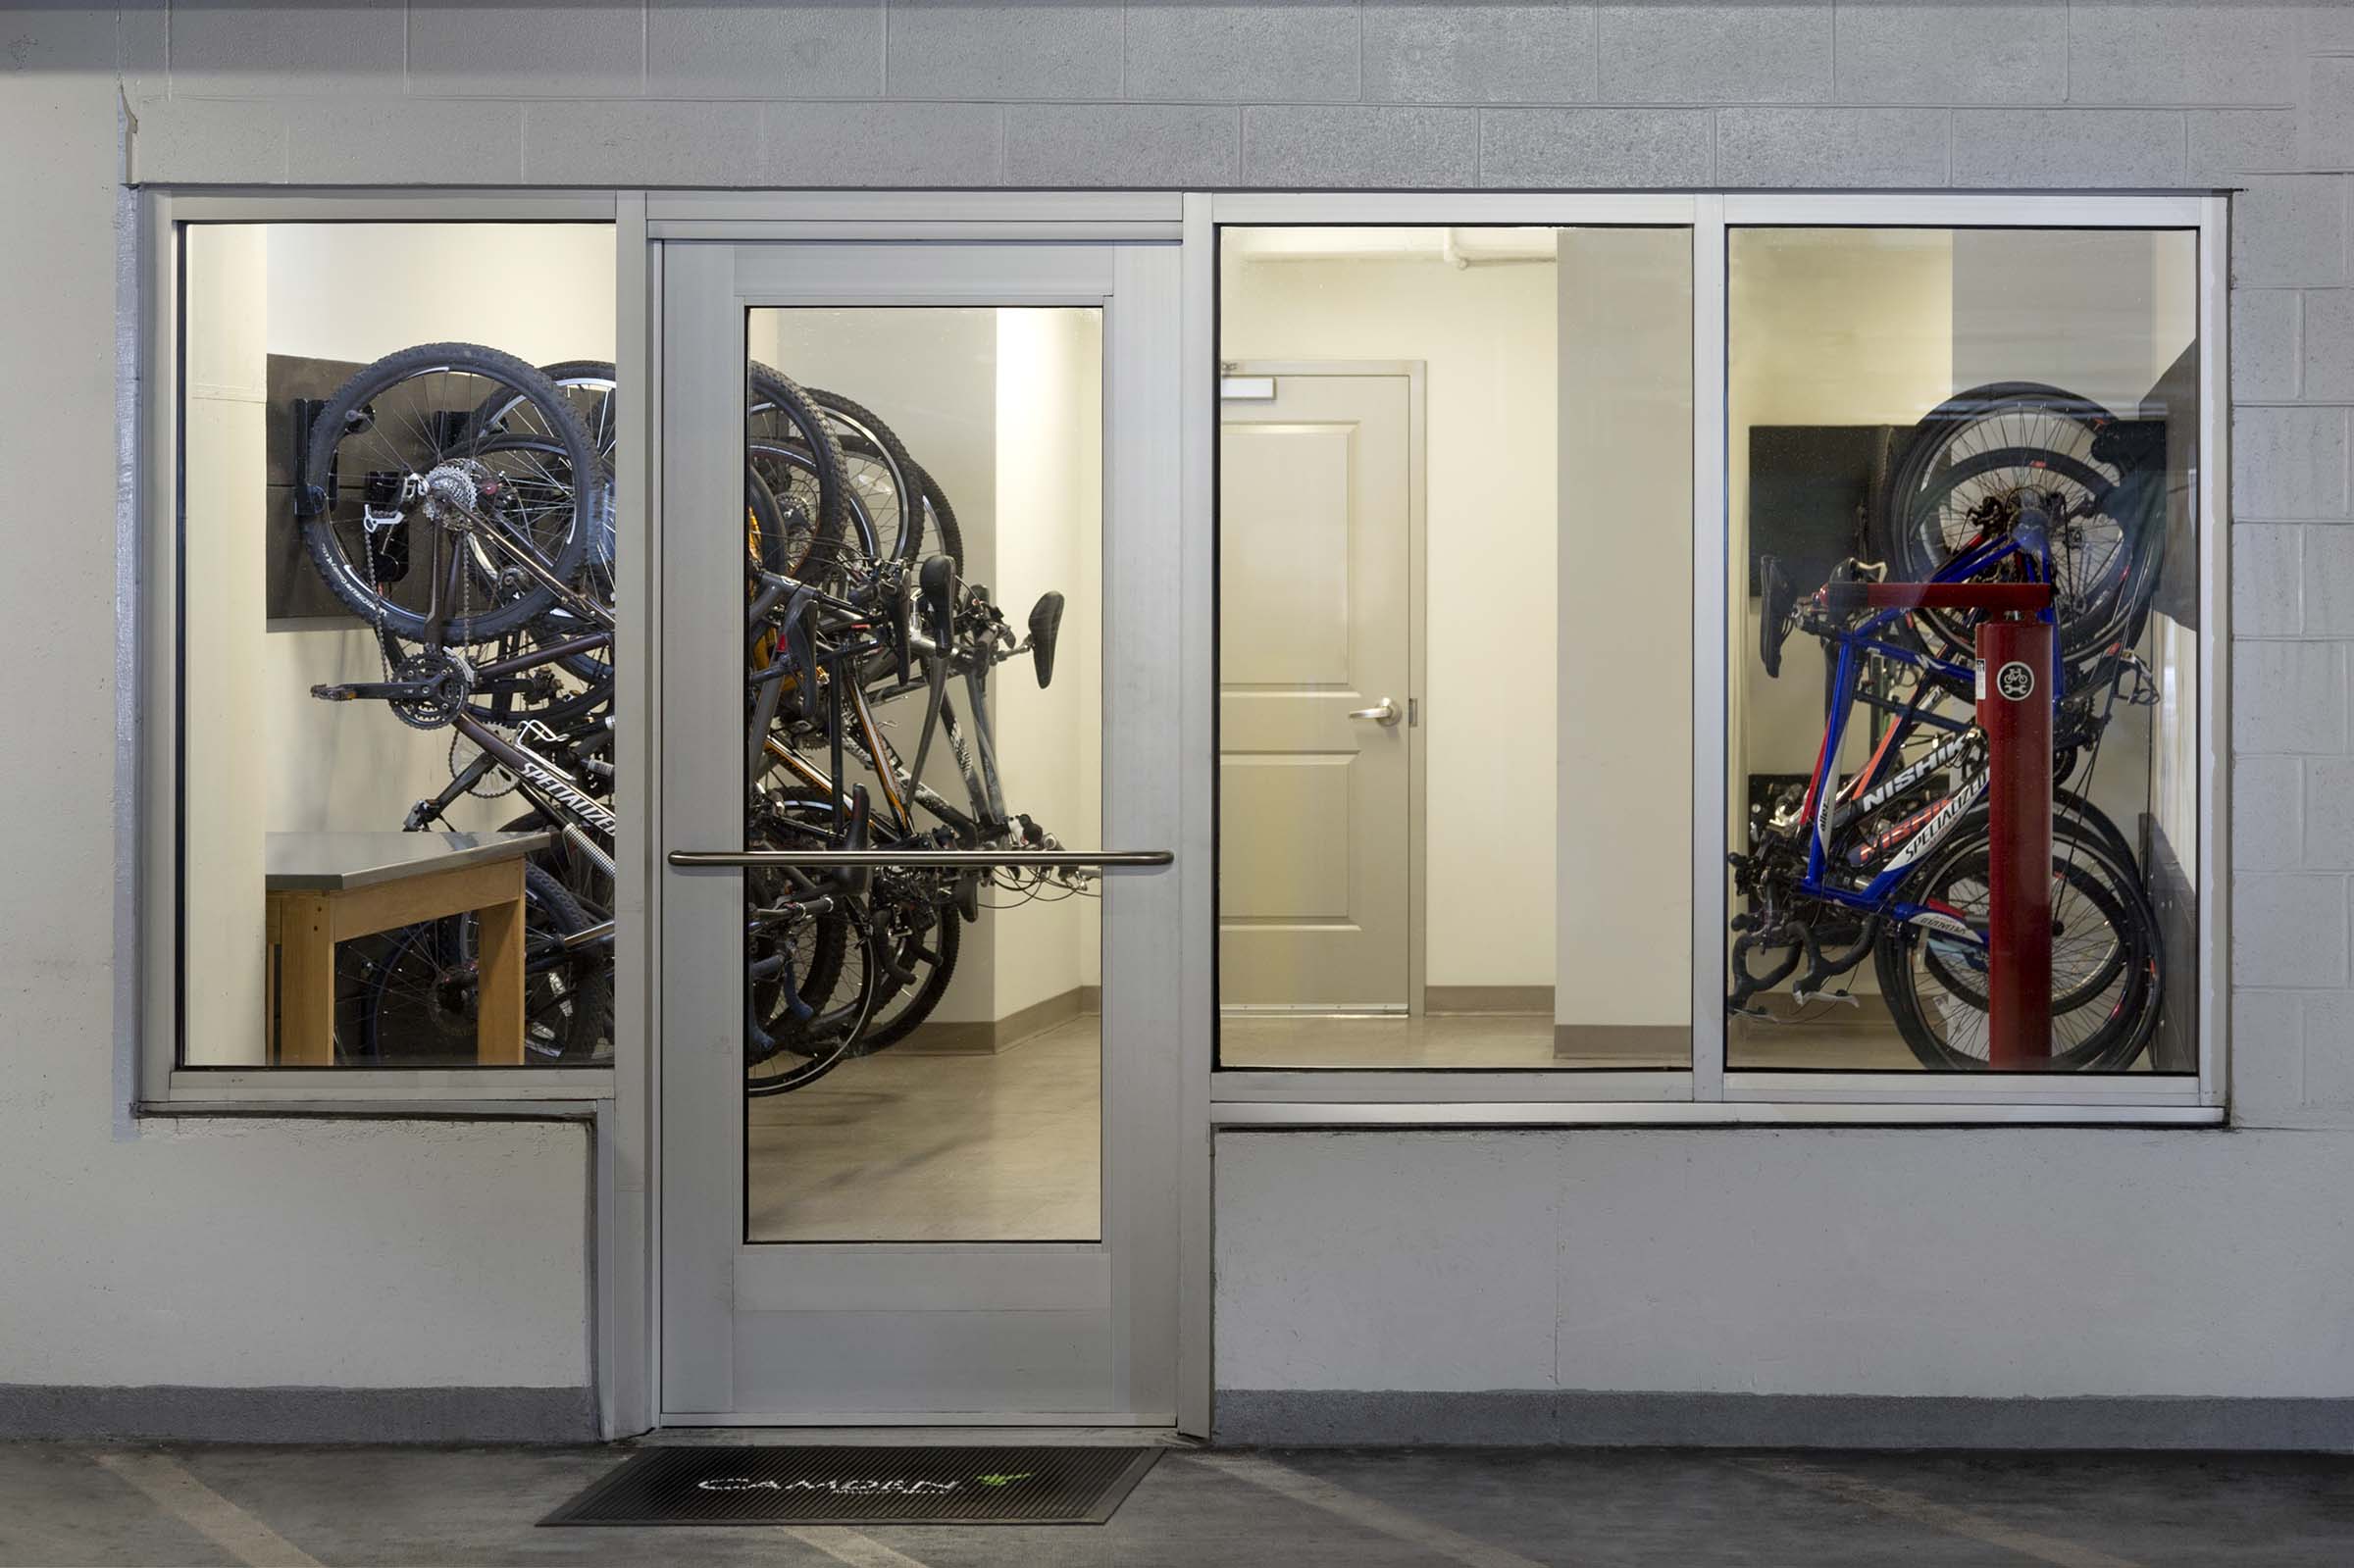 Enclosed bike storage room in the garage.